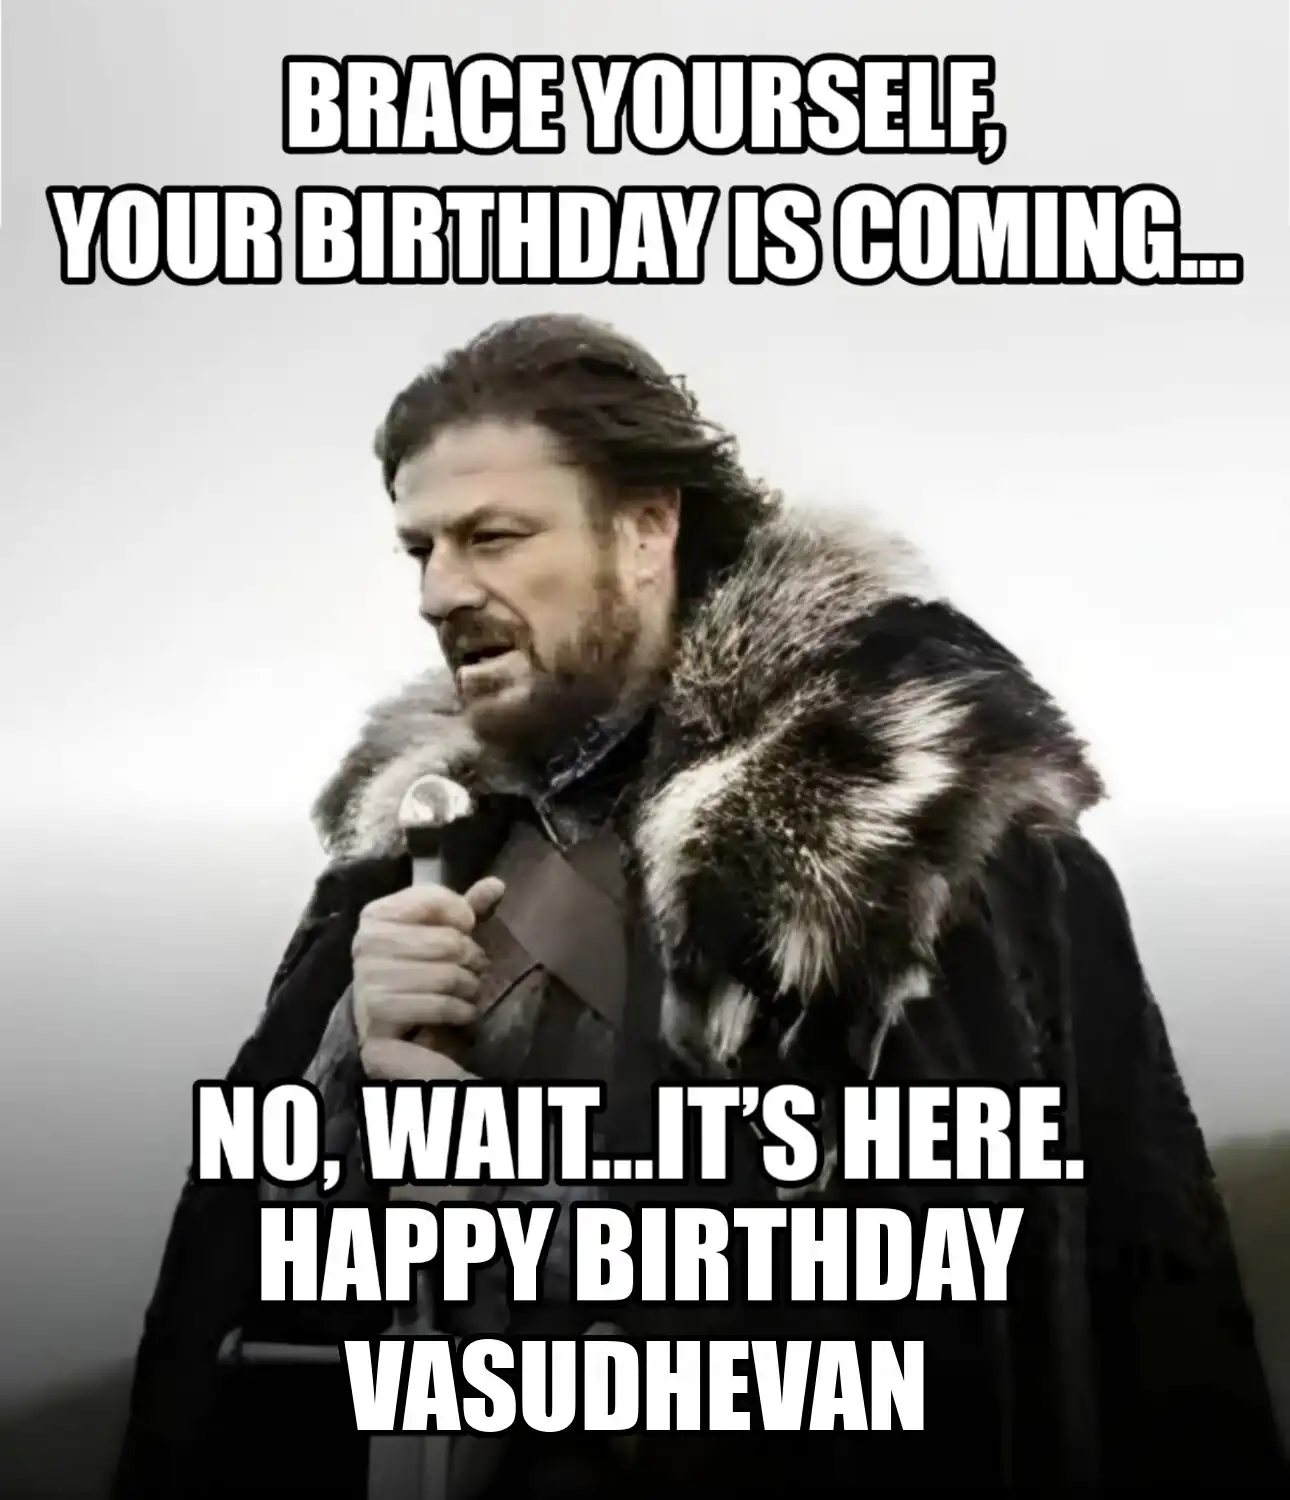 Happy Birthday Vasudhevan Brace Yourself Your Birthday Is Coming Meme